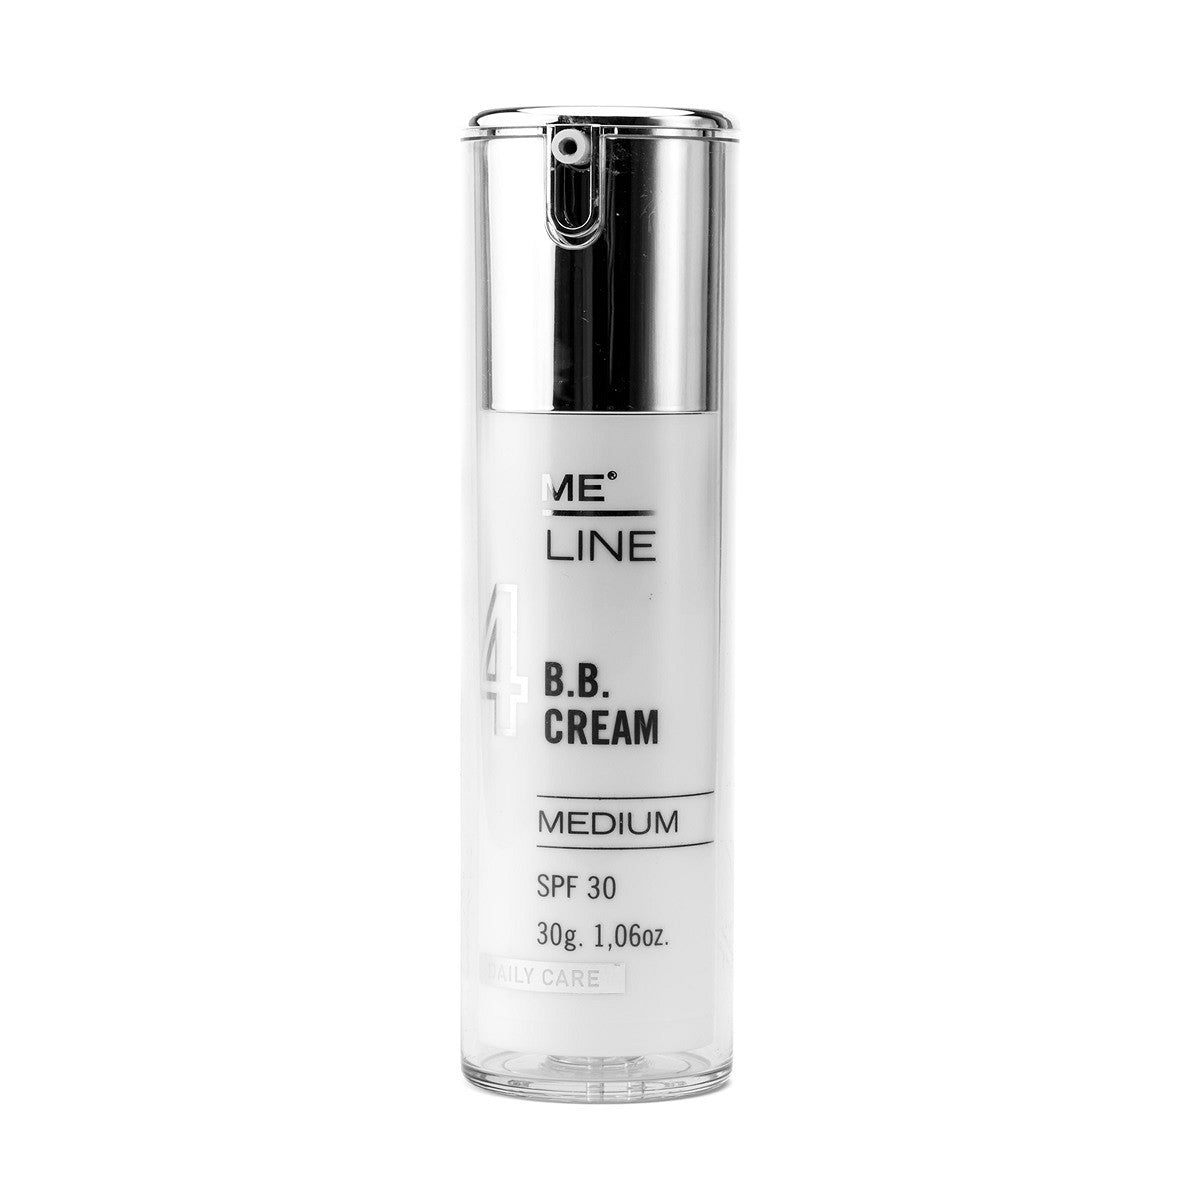 MeLine BB Cream Medium SPF 30